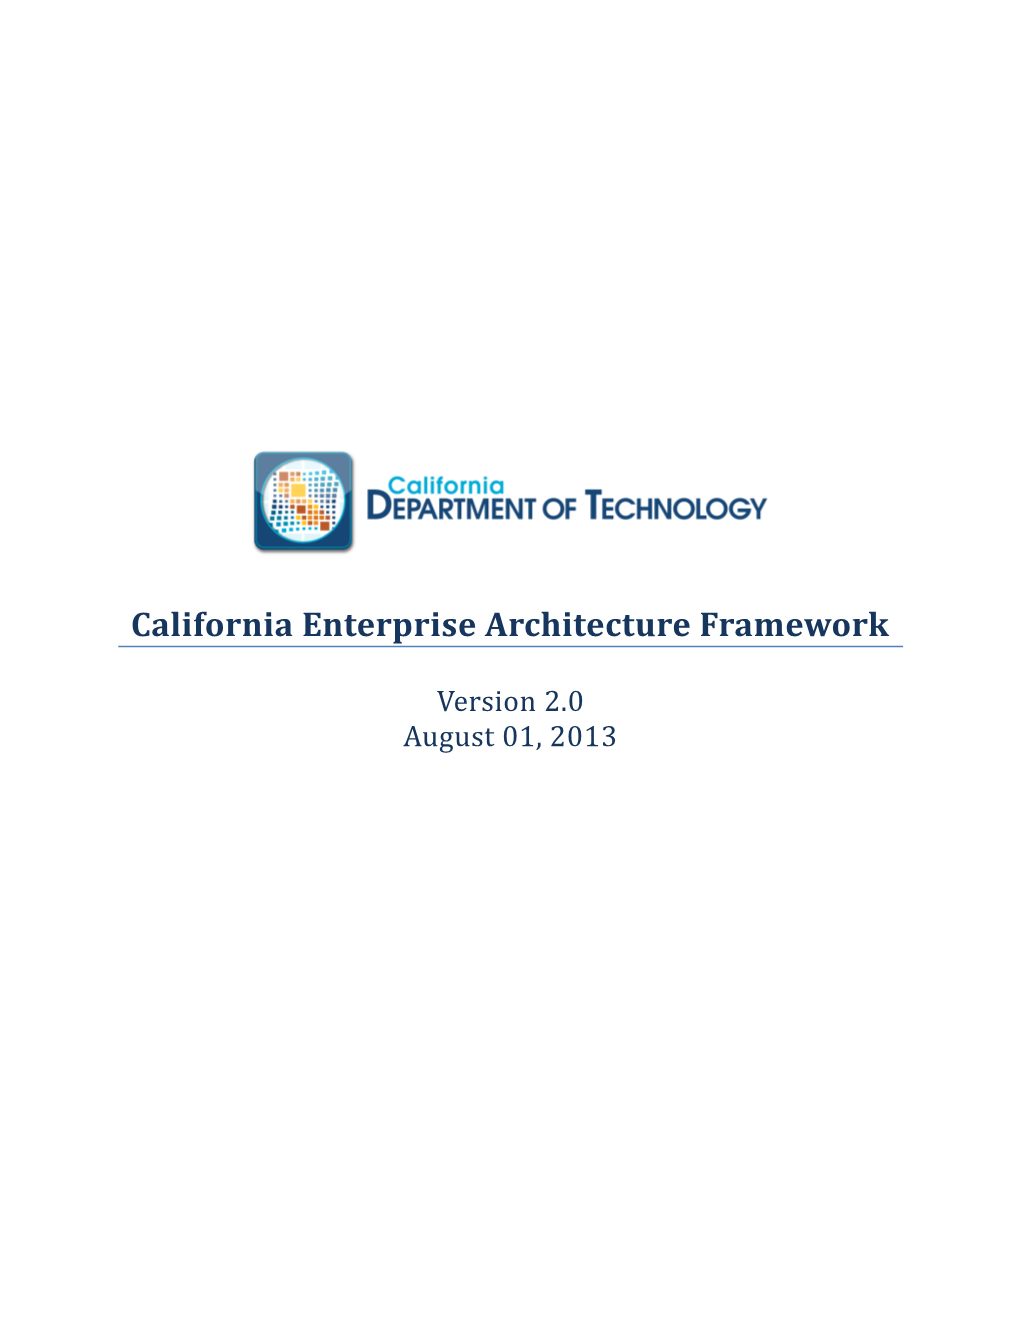 California Enterprise Architecture Framework Version 1.0 (CEAF 1.0) Was Released on July 15, 2005